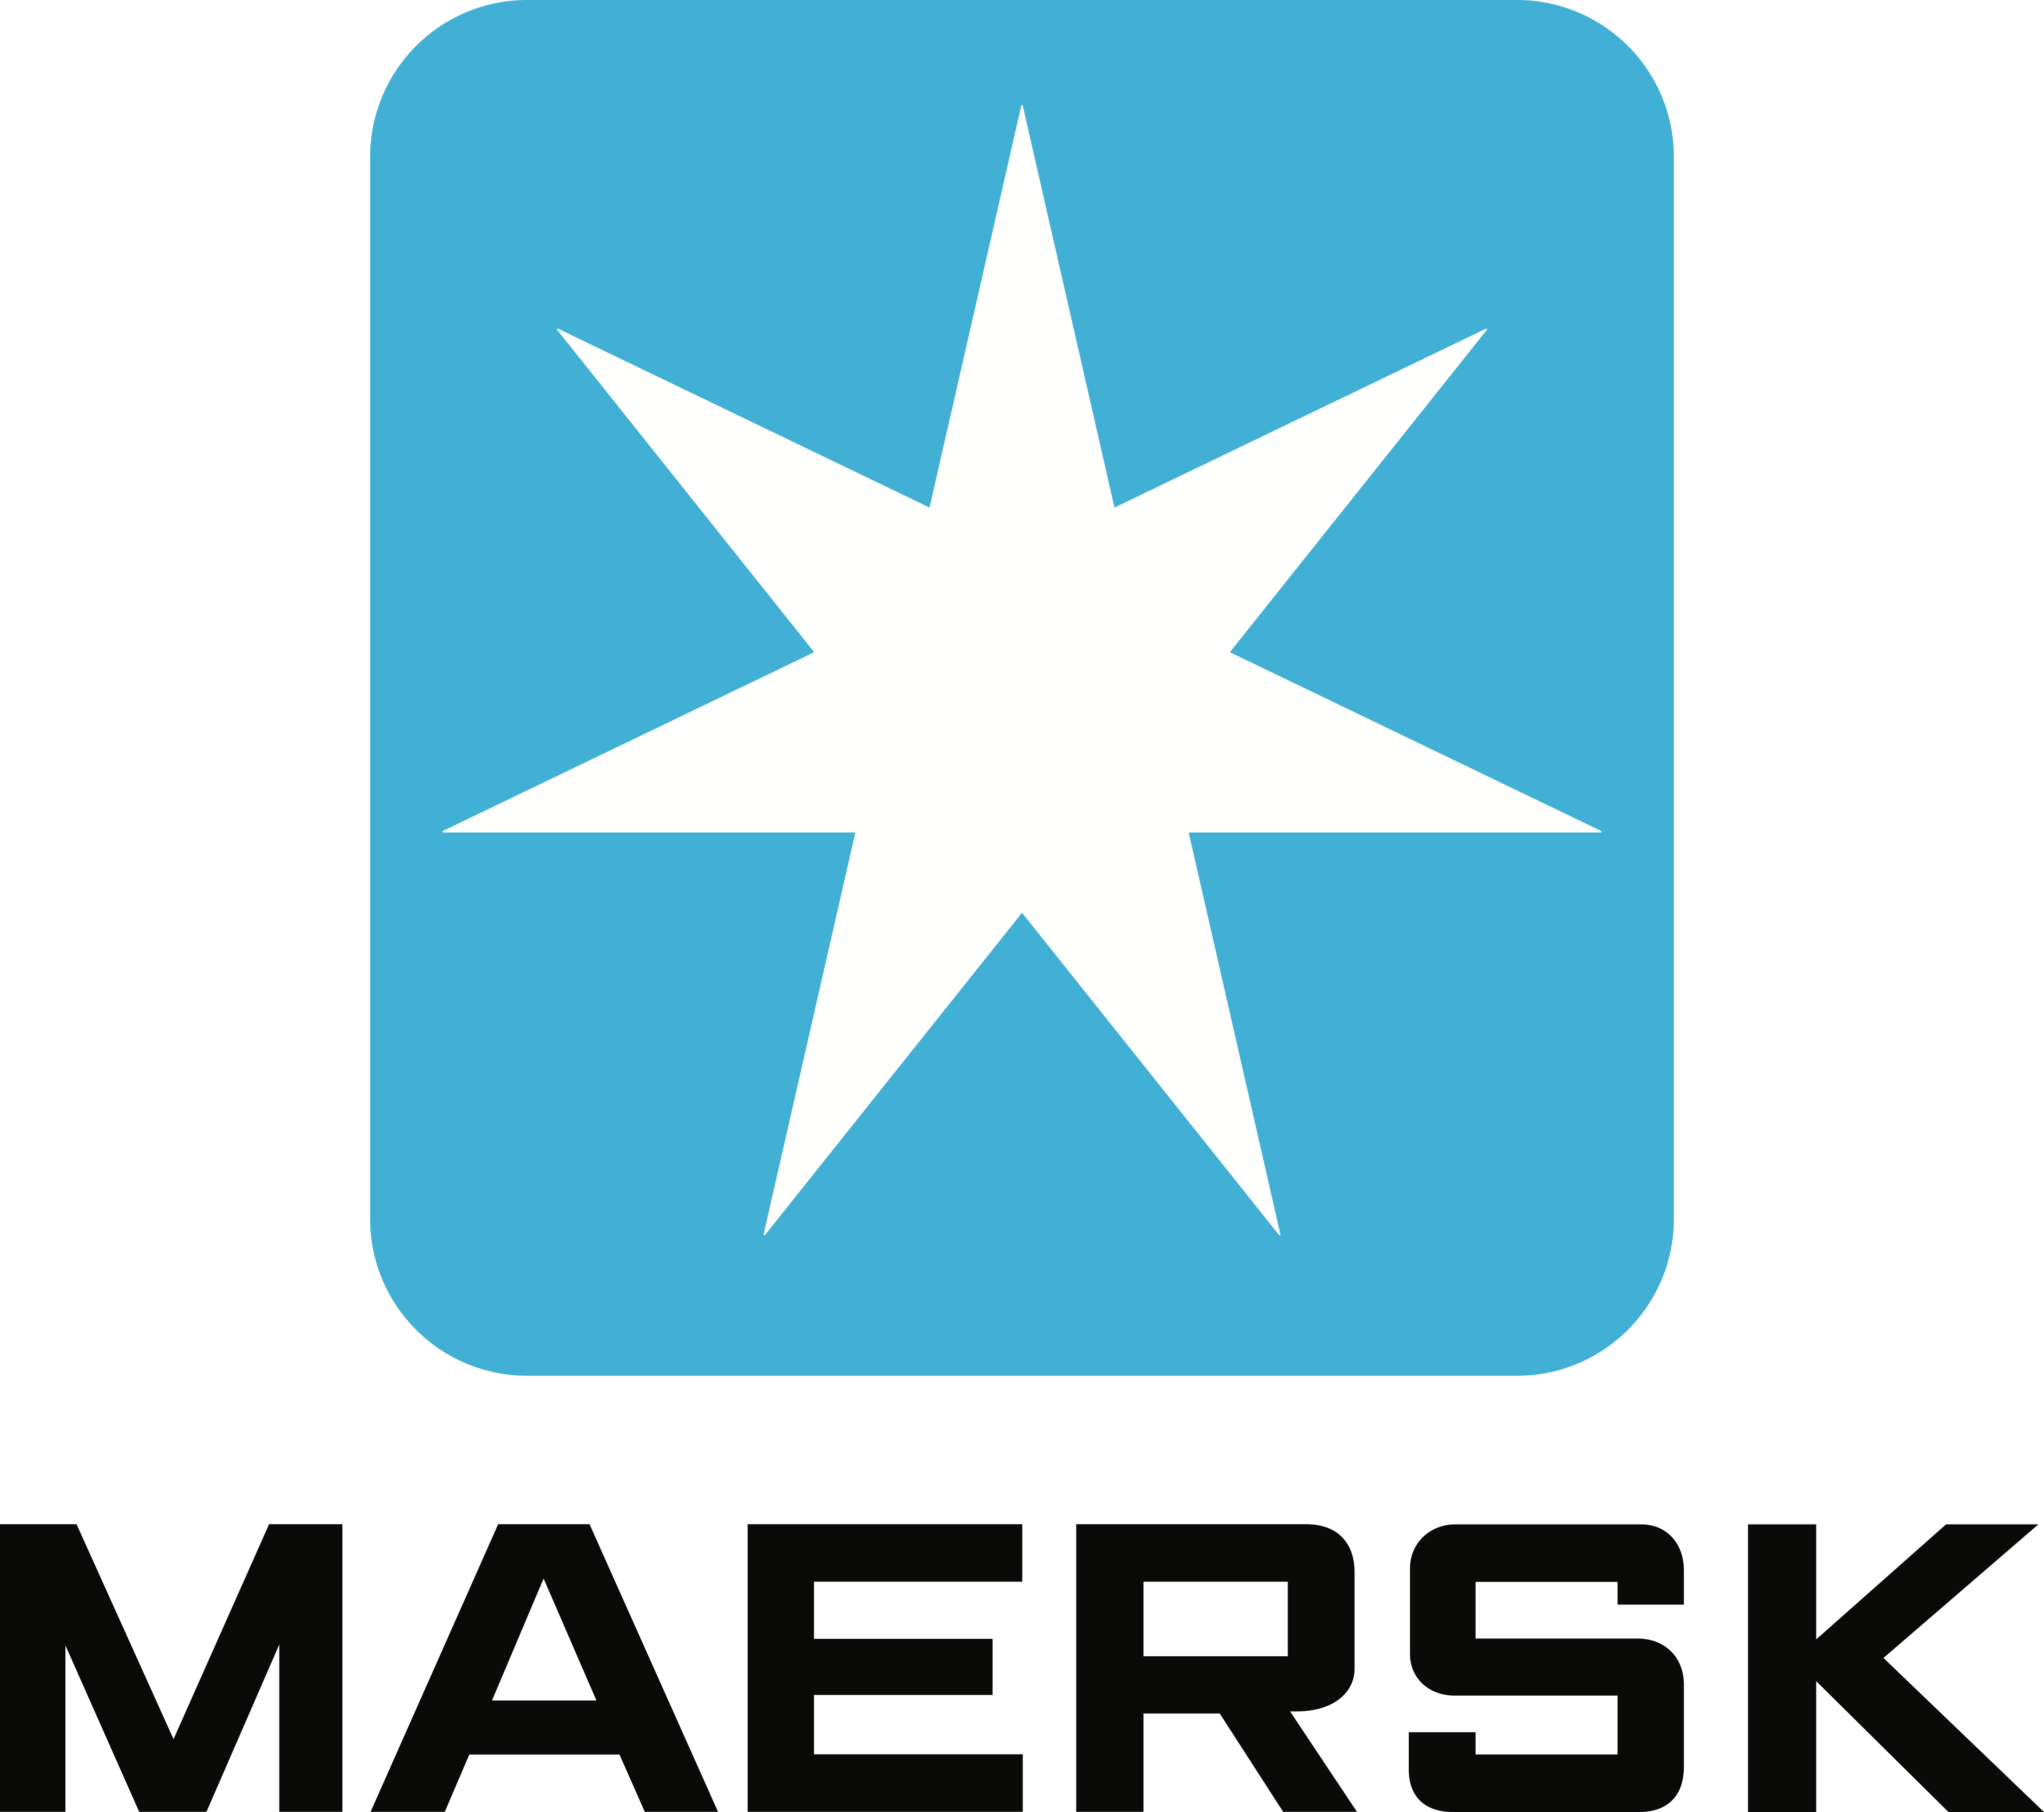 maersk logo 1 - Maersk Logo